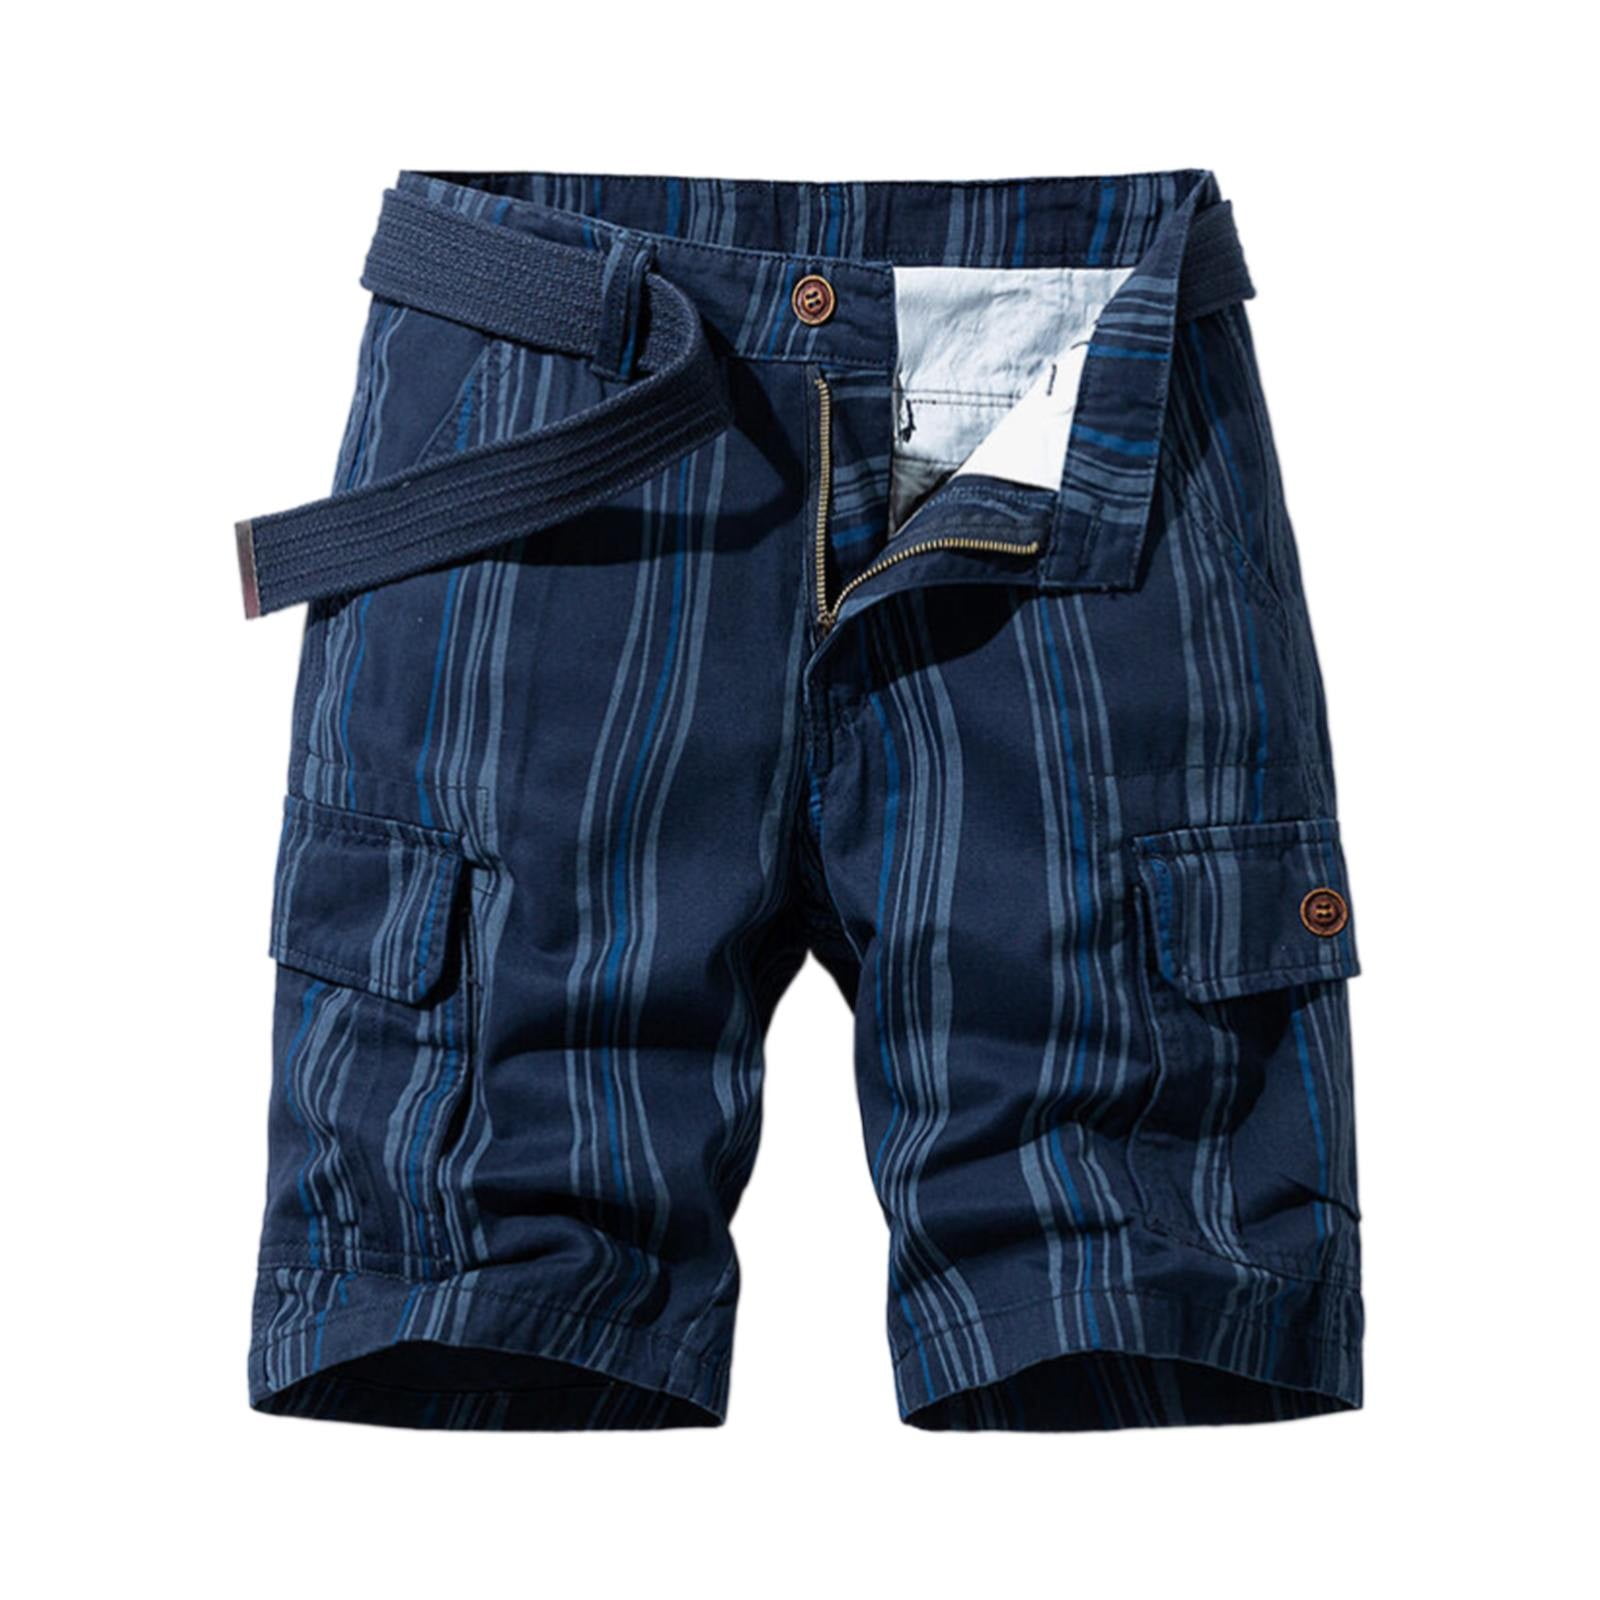 adviicd Cargo Shorts for Men Mens Cargo Shorts Outdoor Fashion Casual ...